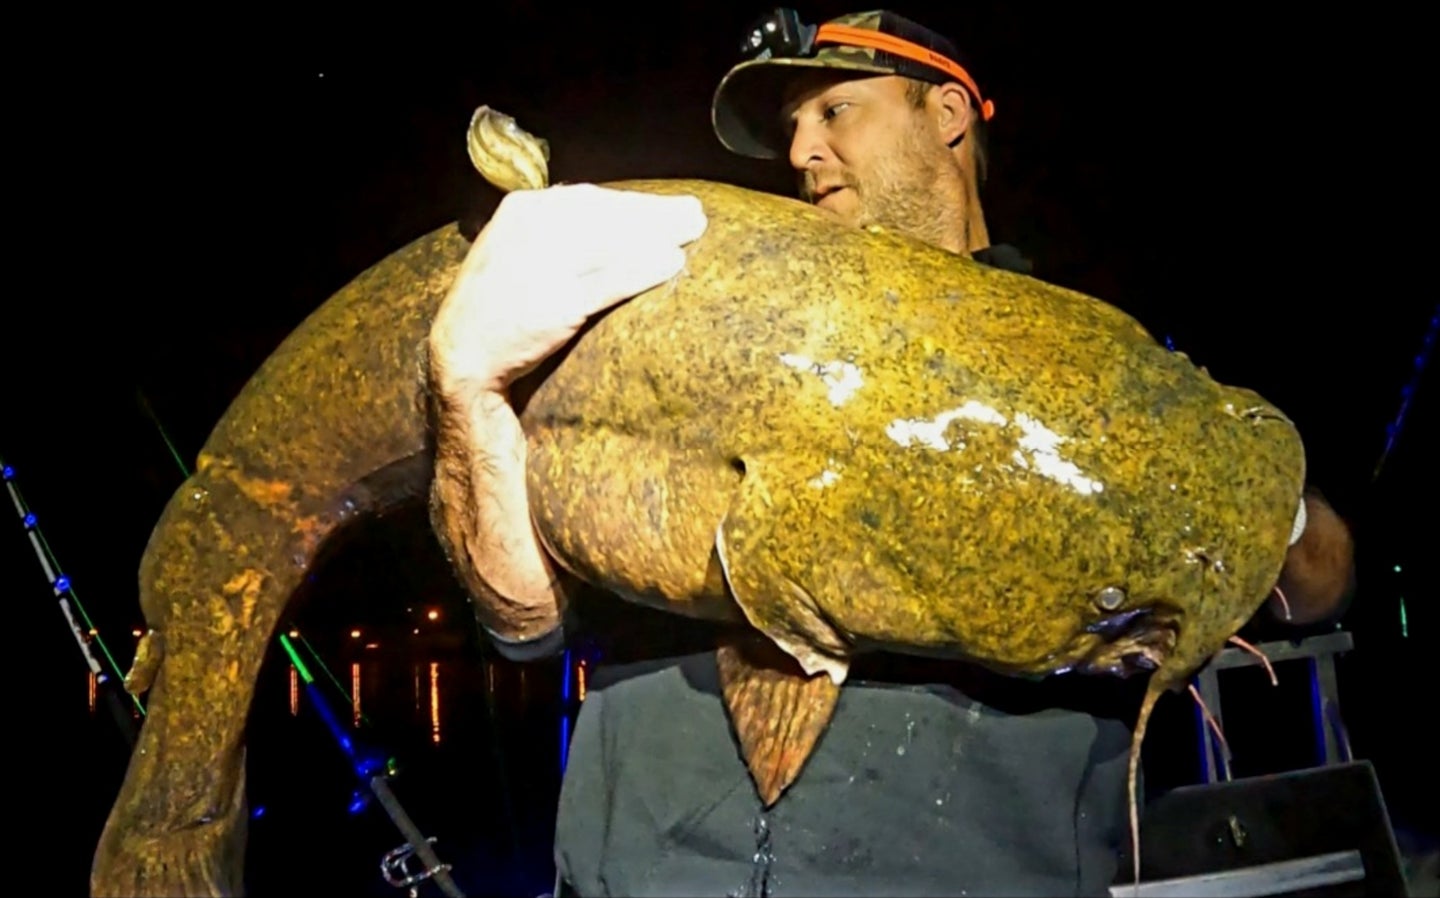 Man holds big flathead catfish at night